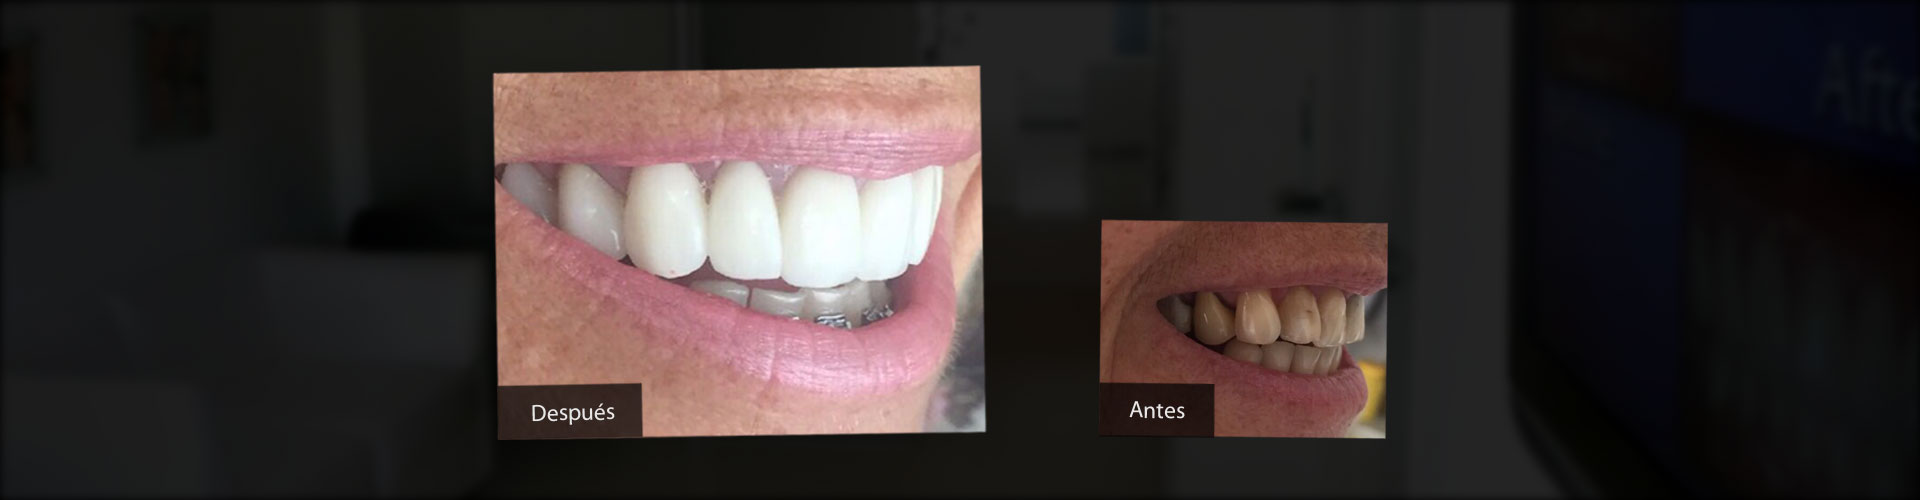 Implantes Dentales, Estética Dental, Ortodoncia